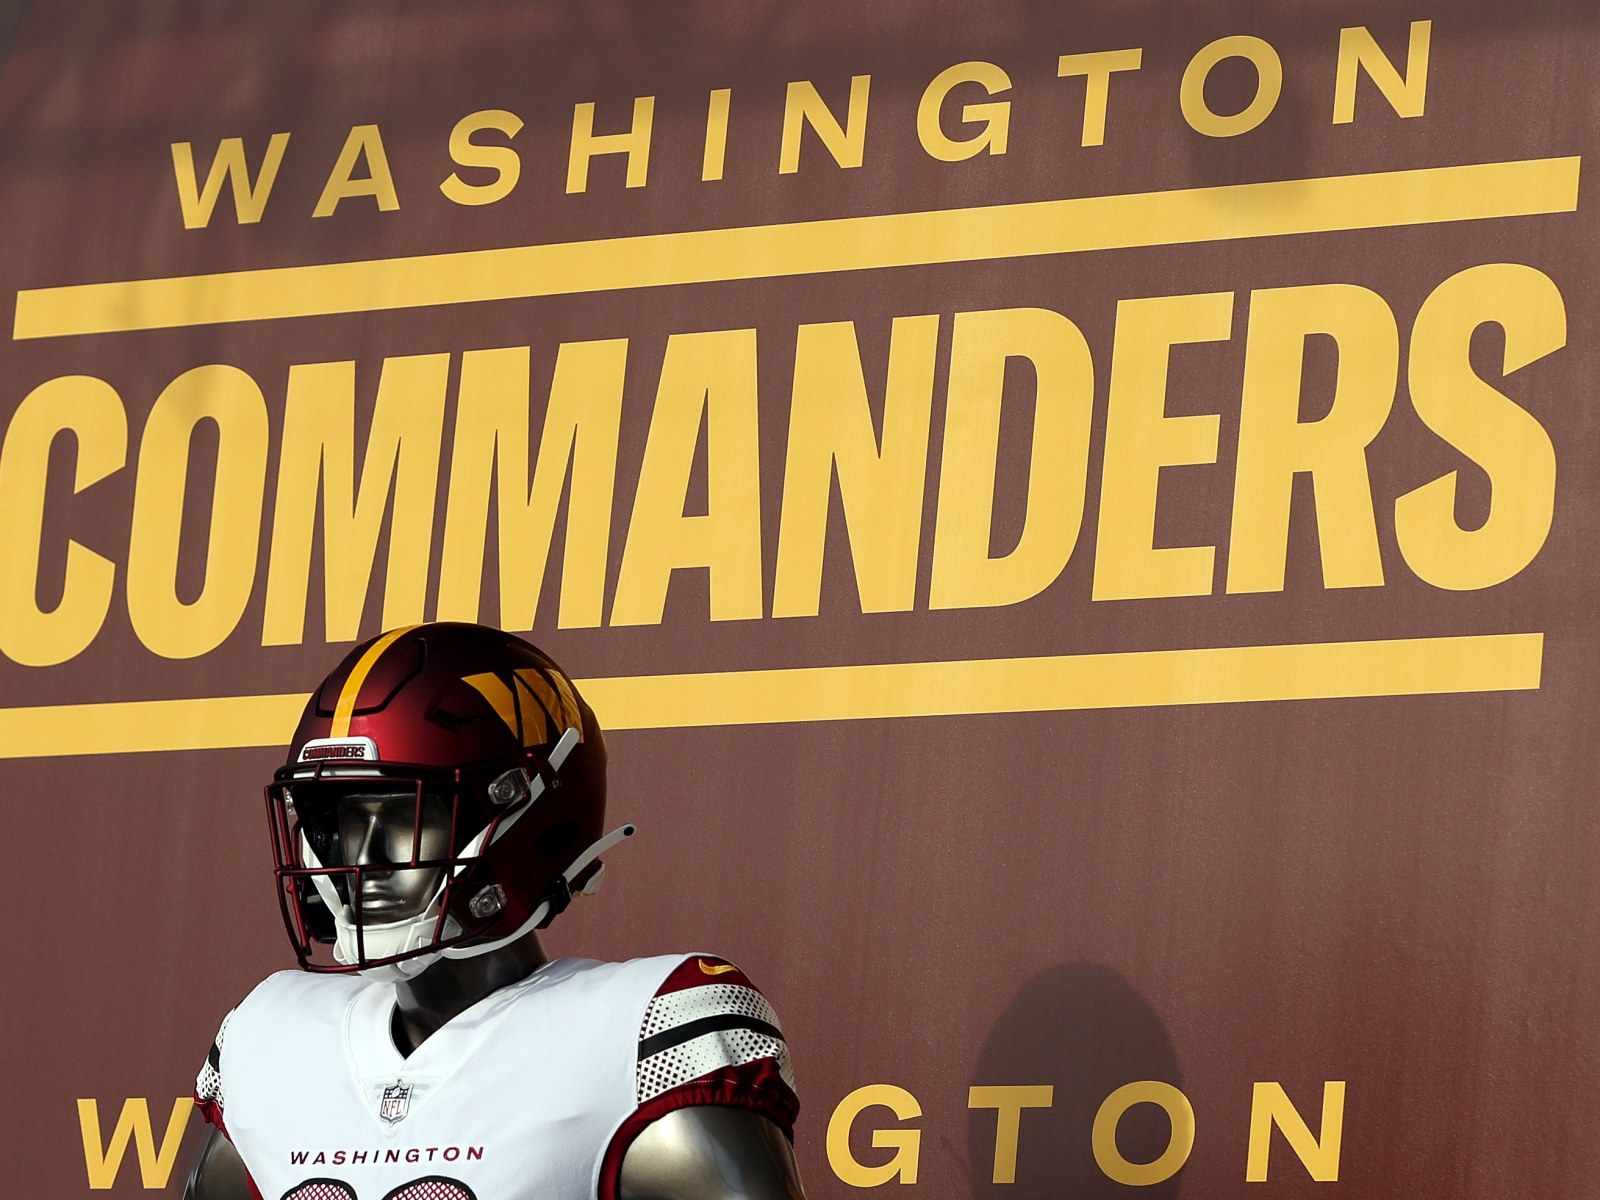 Washington Commanders unveil name, logos and uniforms